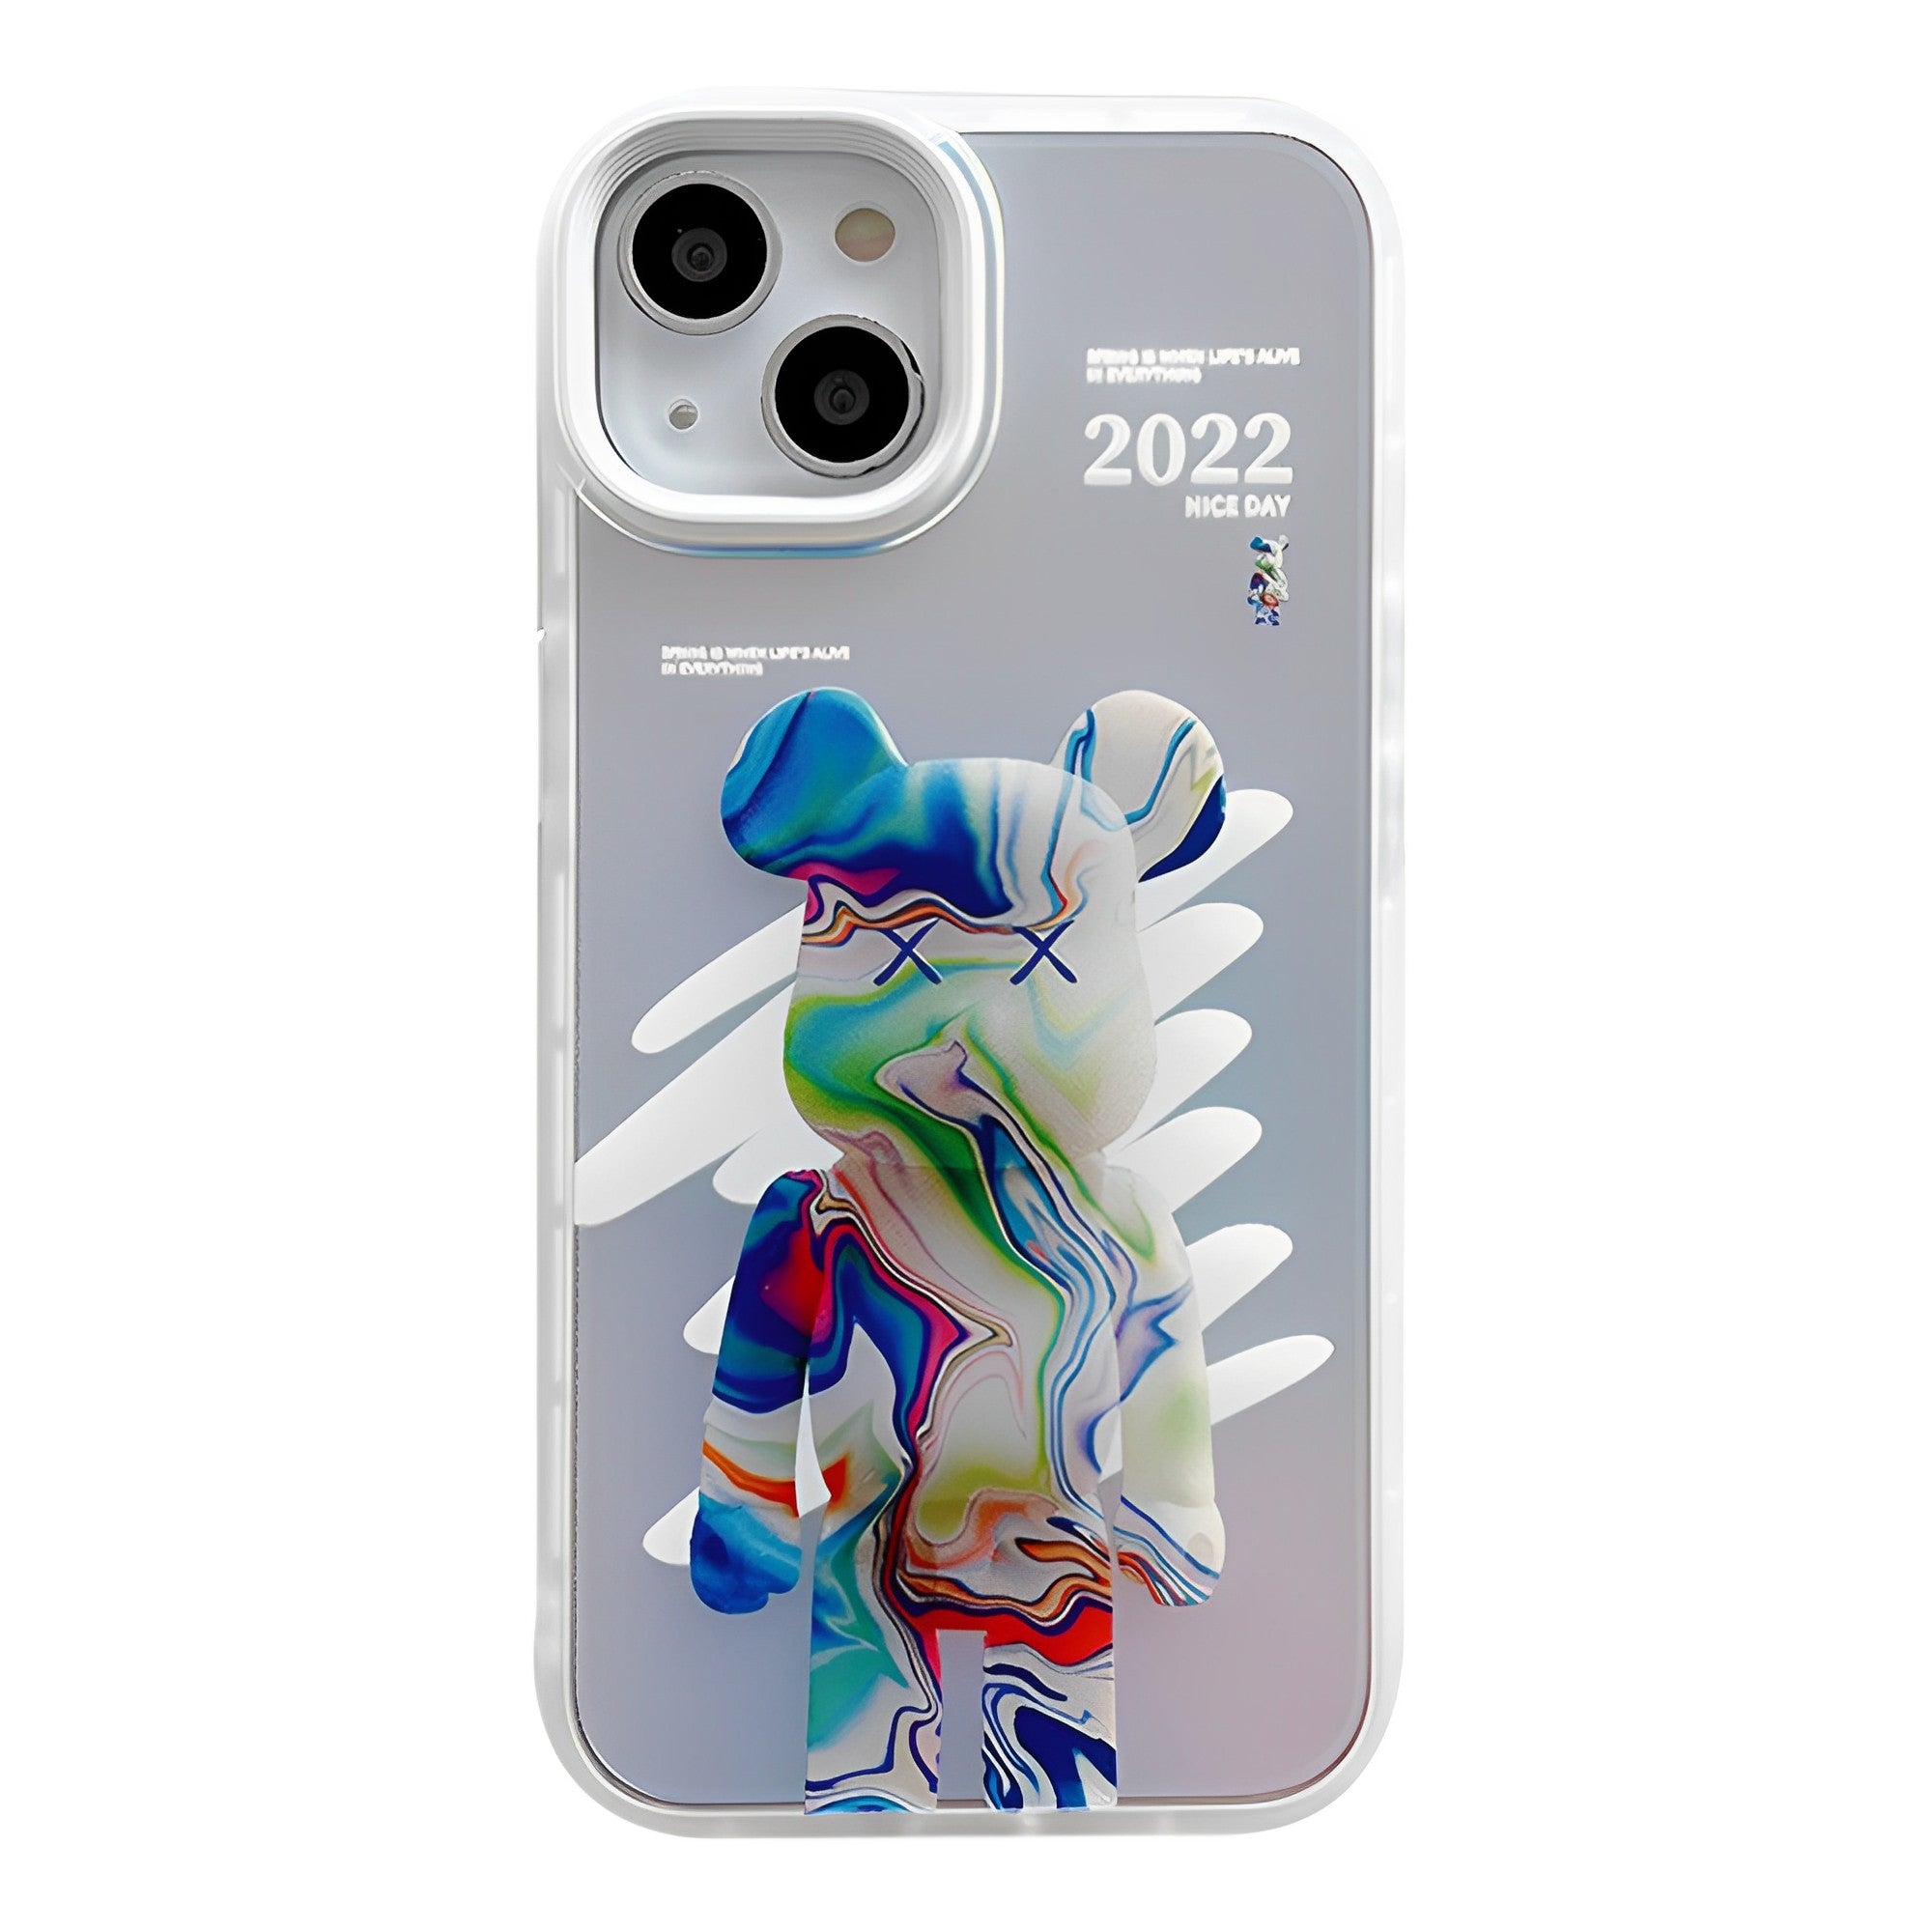 Hologram Watercolor Violent Bear iPhone Case